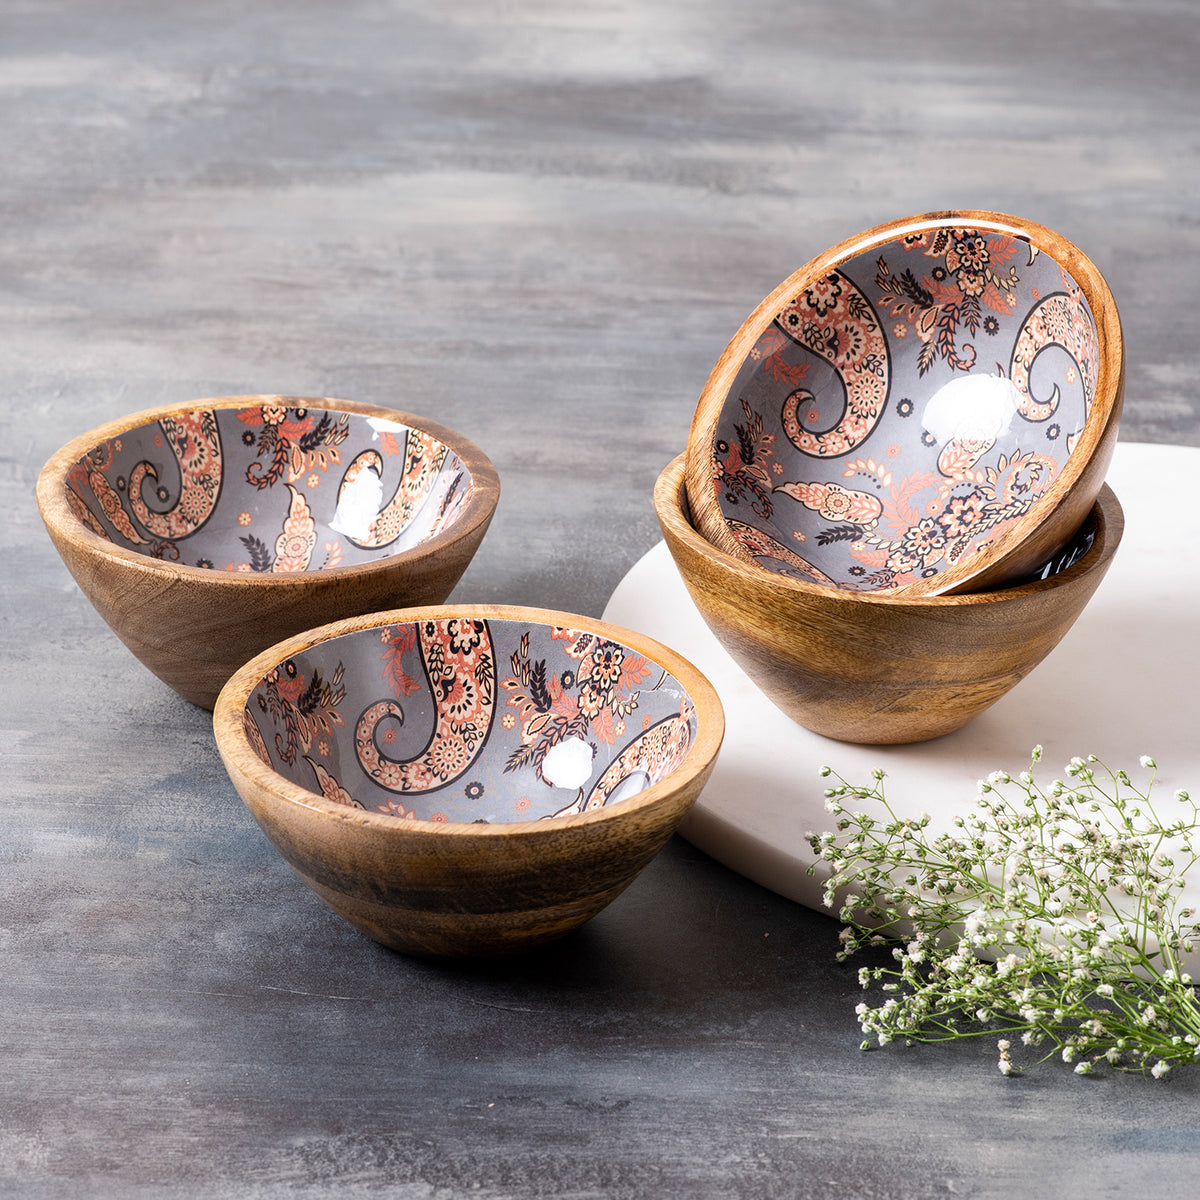 teak wood bowl set